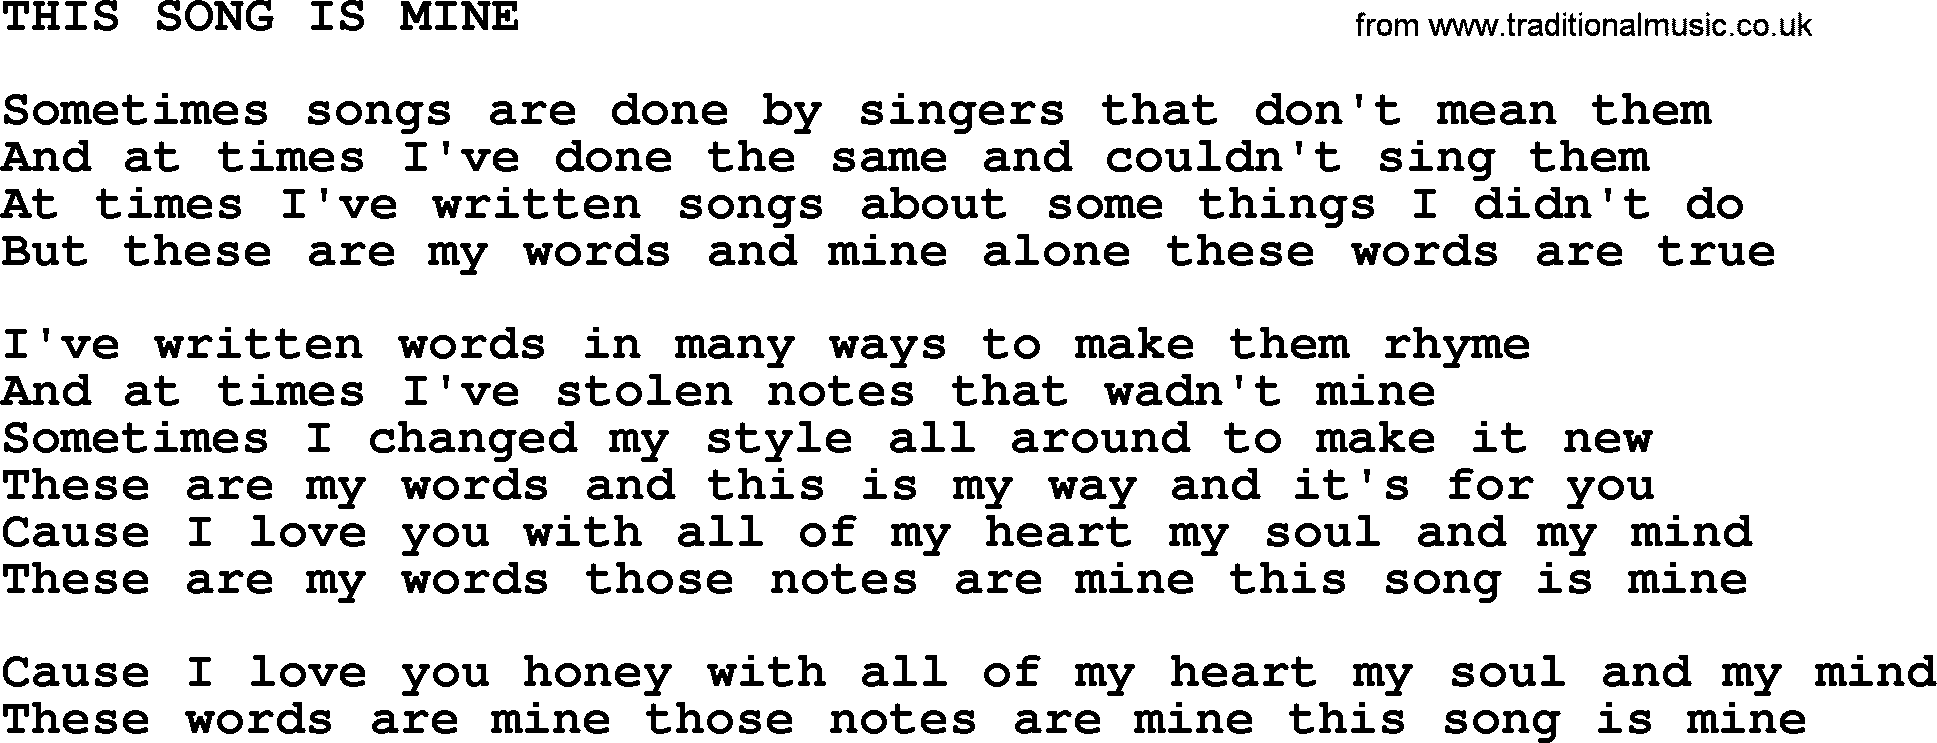 Merle Haggard song: This Song Is Mine, lyrics.